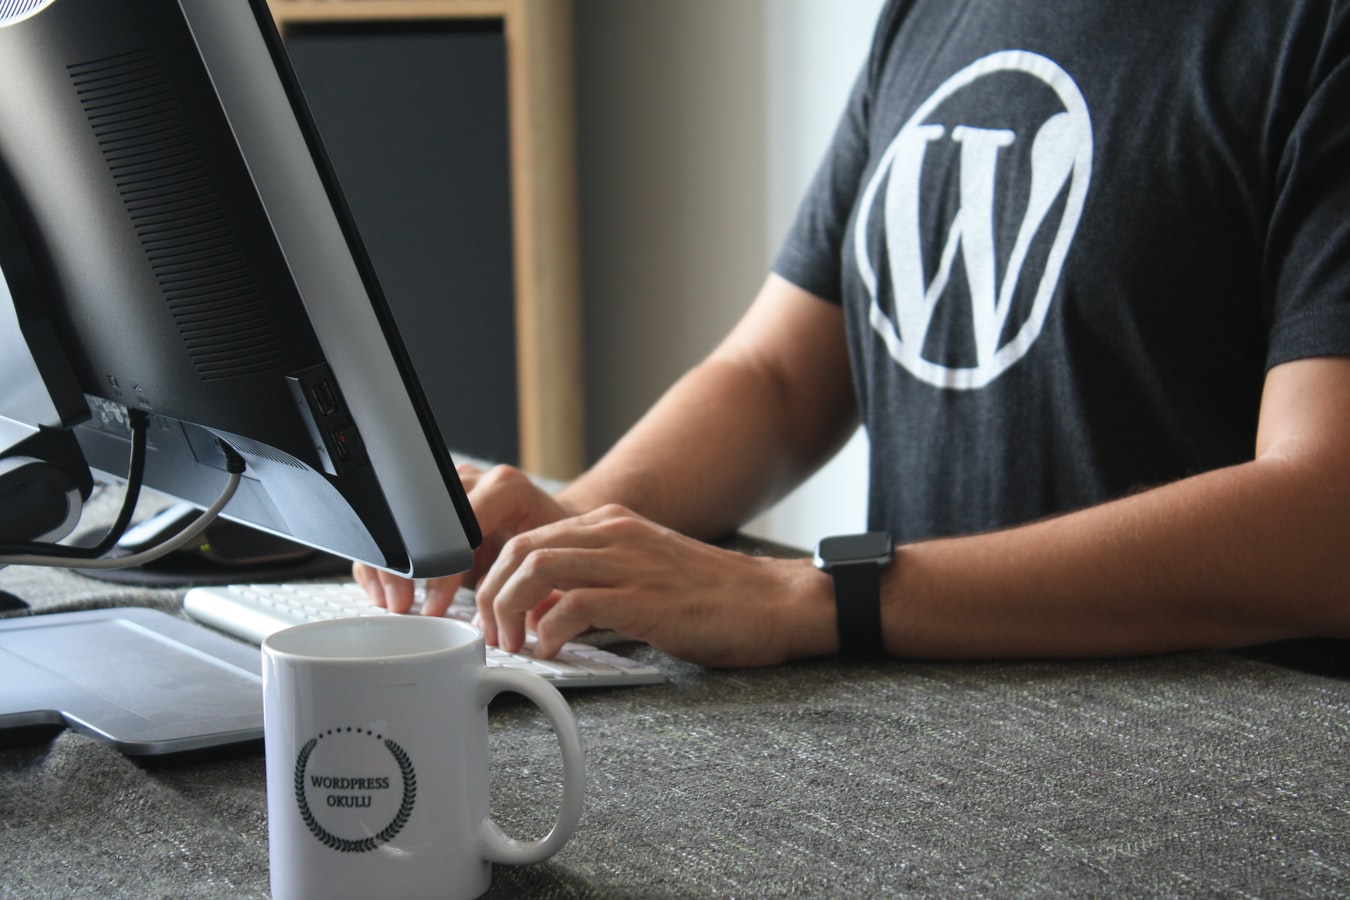 Szukasz hostingu pod WordPressa?